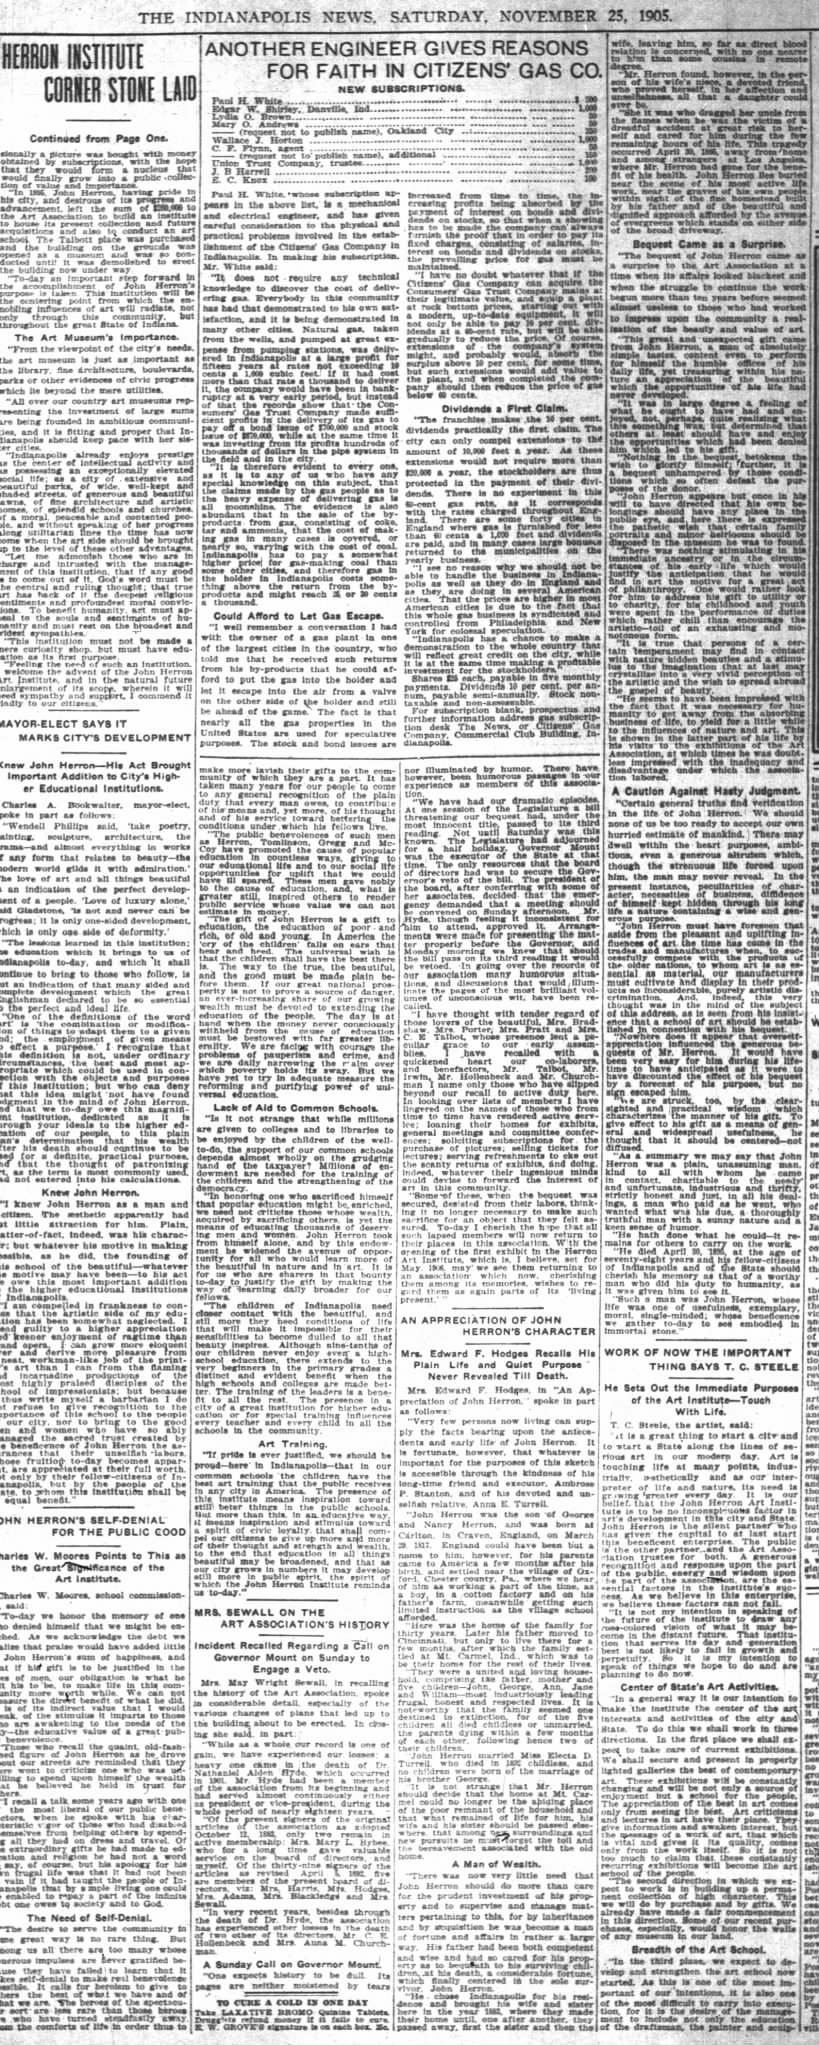 Indianapolis News, Indiana 25 Nov 1905. Re: John Herron